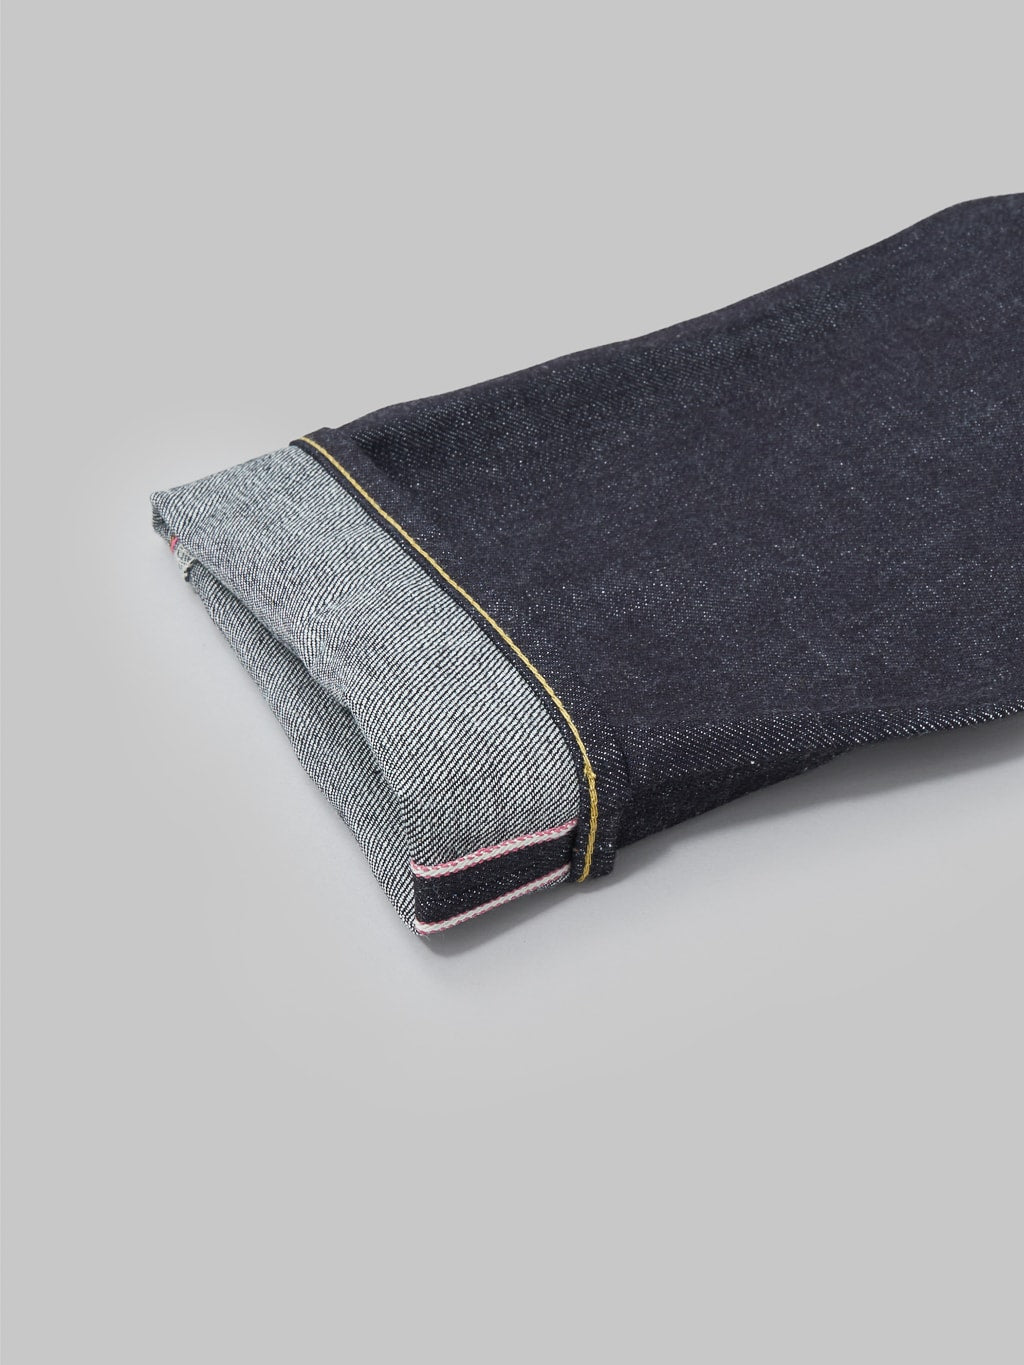 momotaro 0605 13 indigo jeans natural tapered 13oz fabric